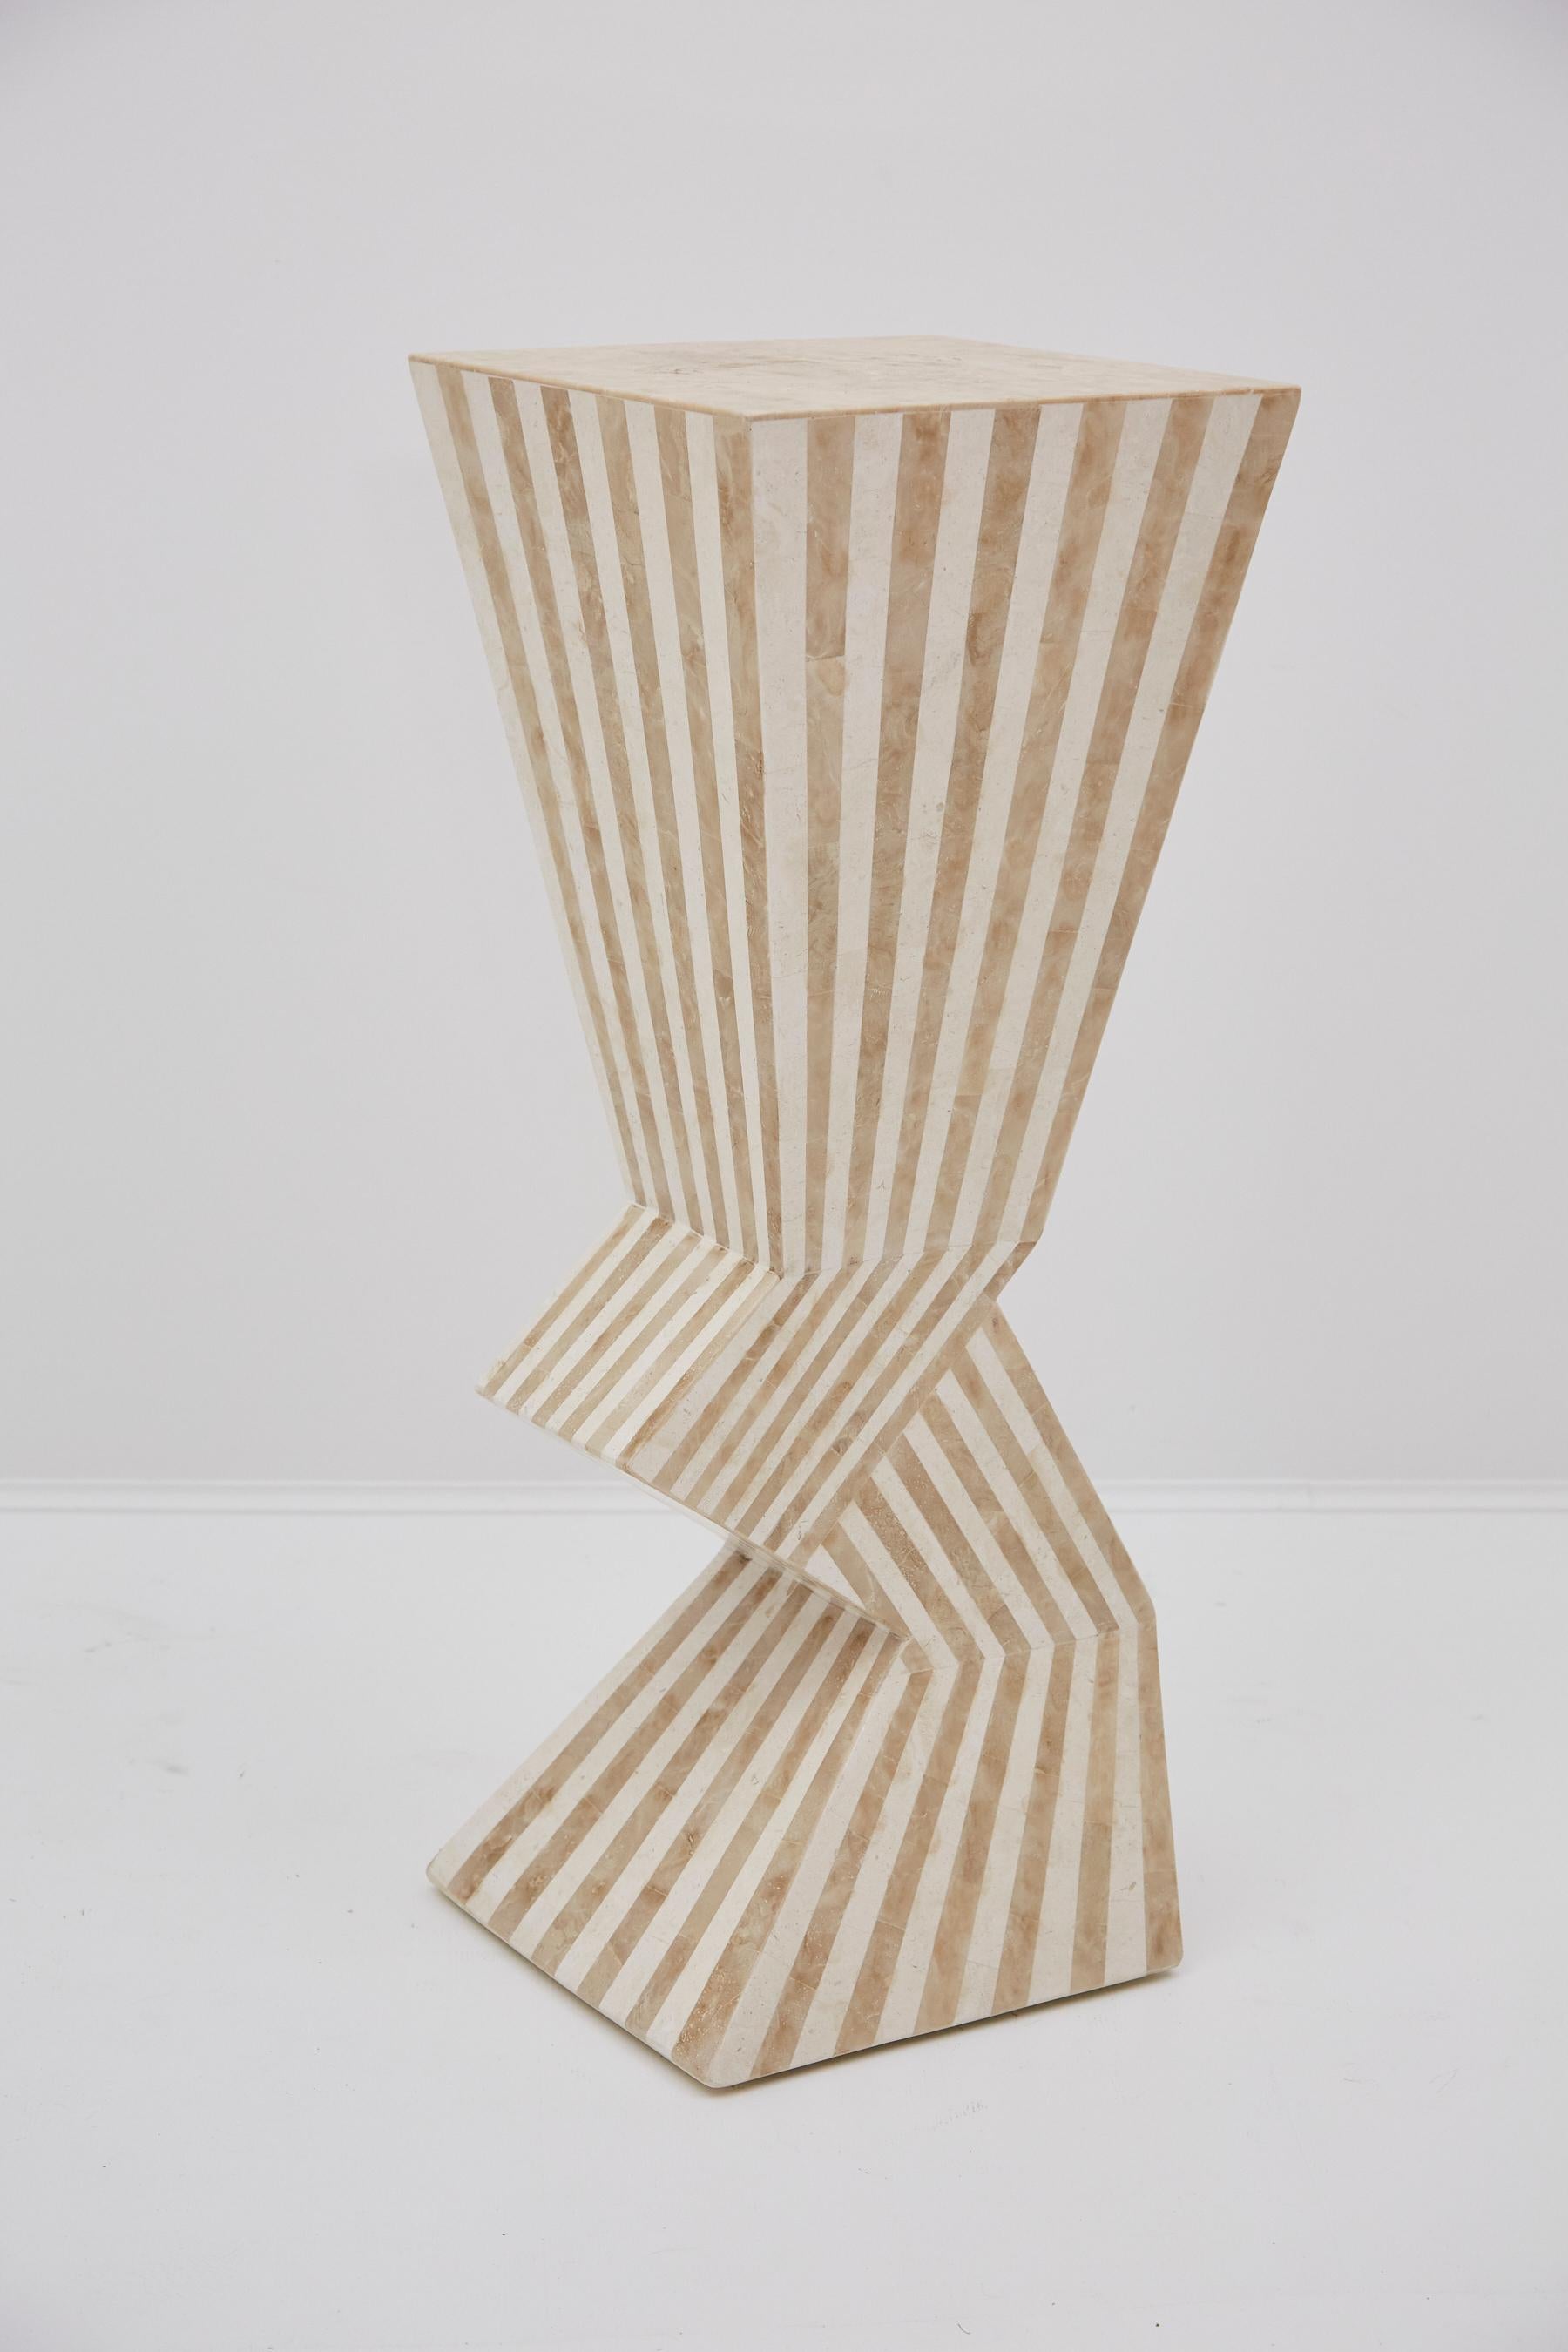 Post-Modern Postmodern 36 in. Zig Zag Striped Tessellated Stone Pedestal, 1990s